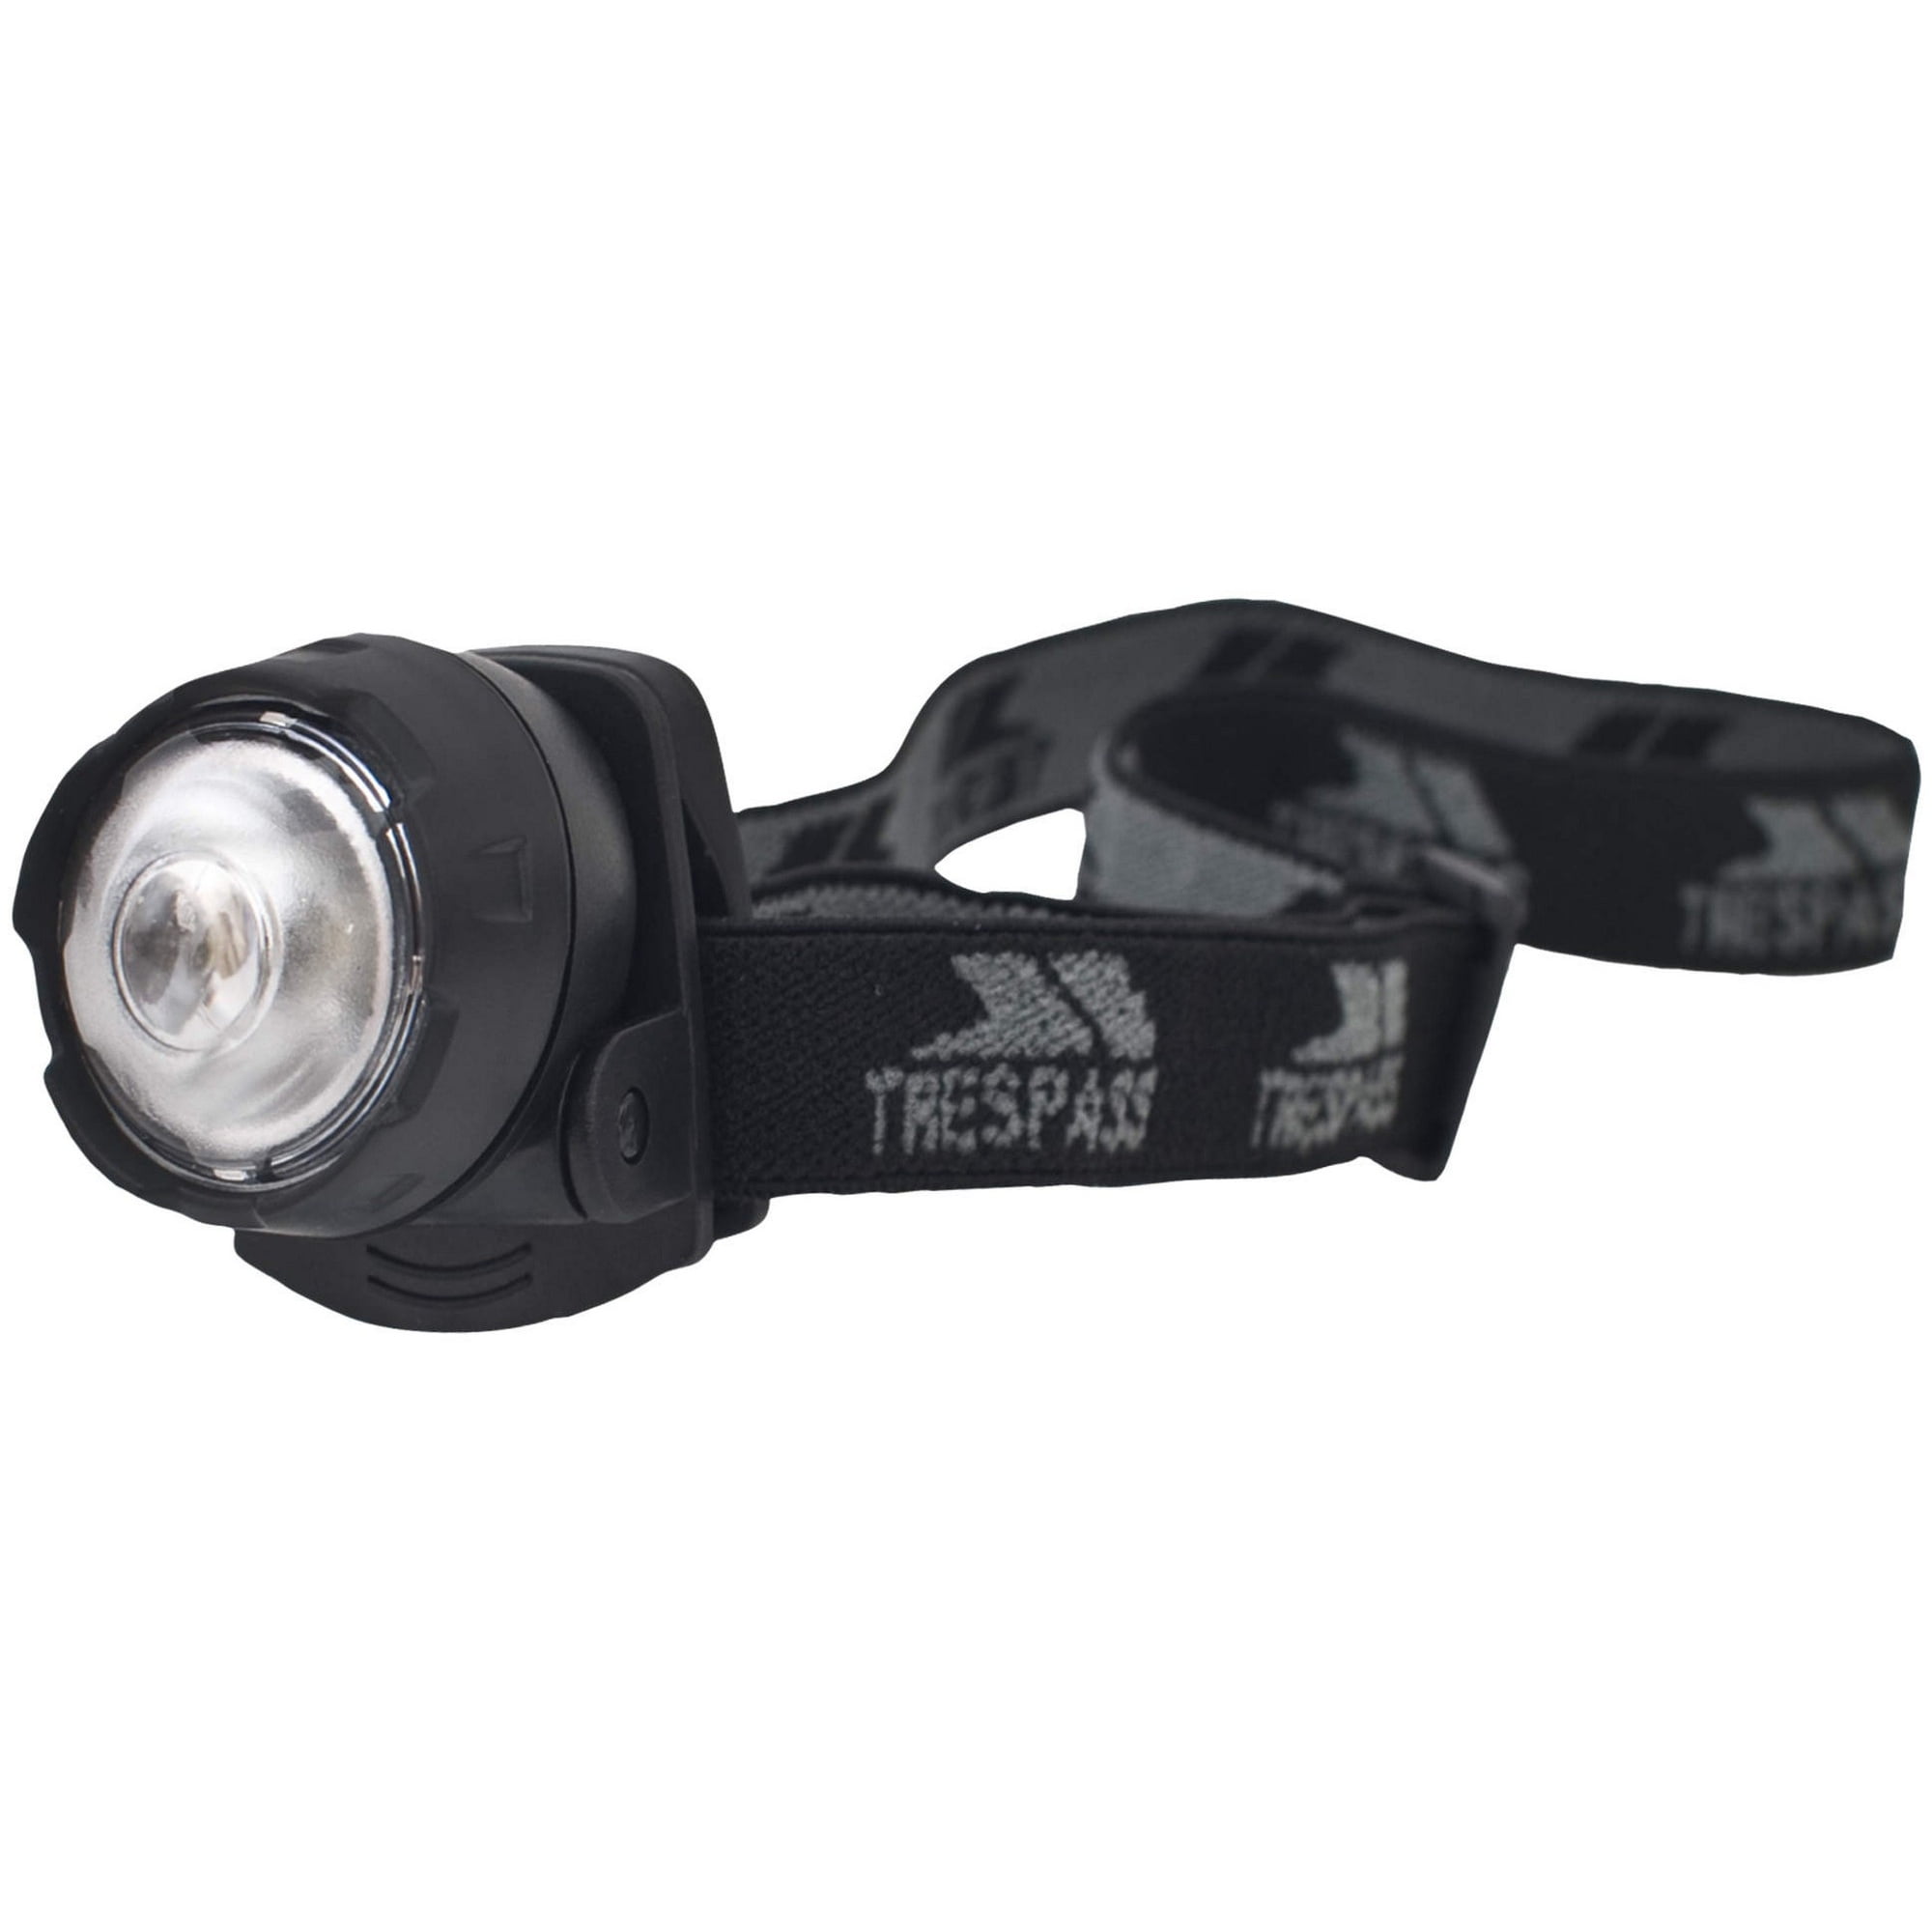 Trespass LED Head Torch Camping Hiking Fishing Headlamp